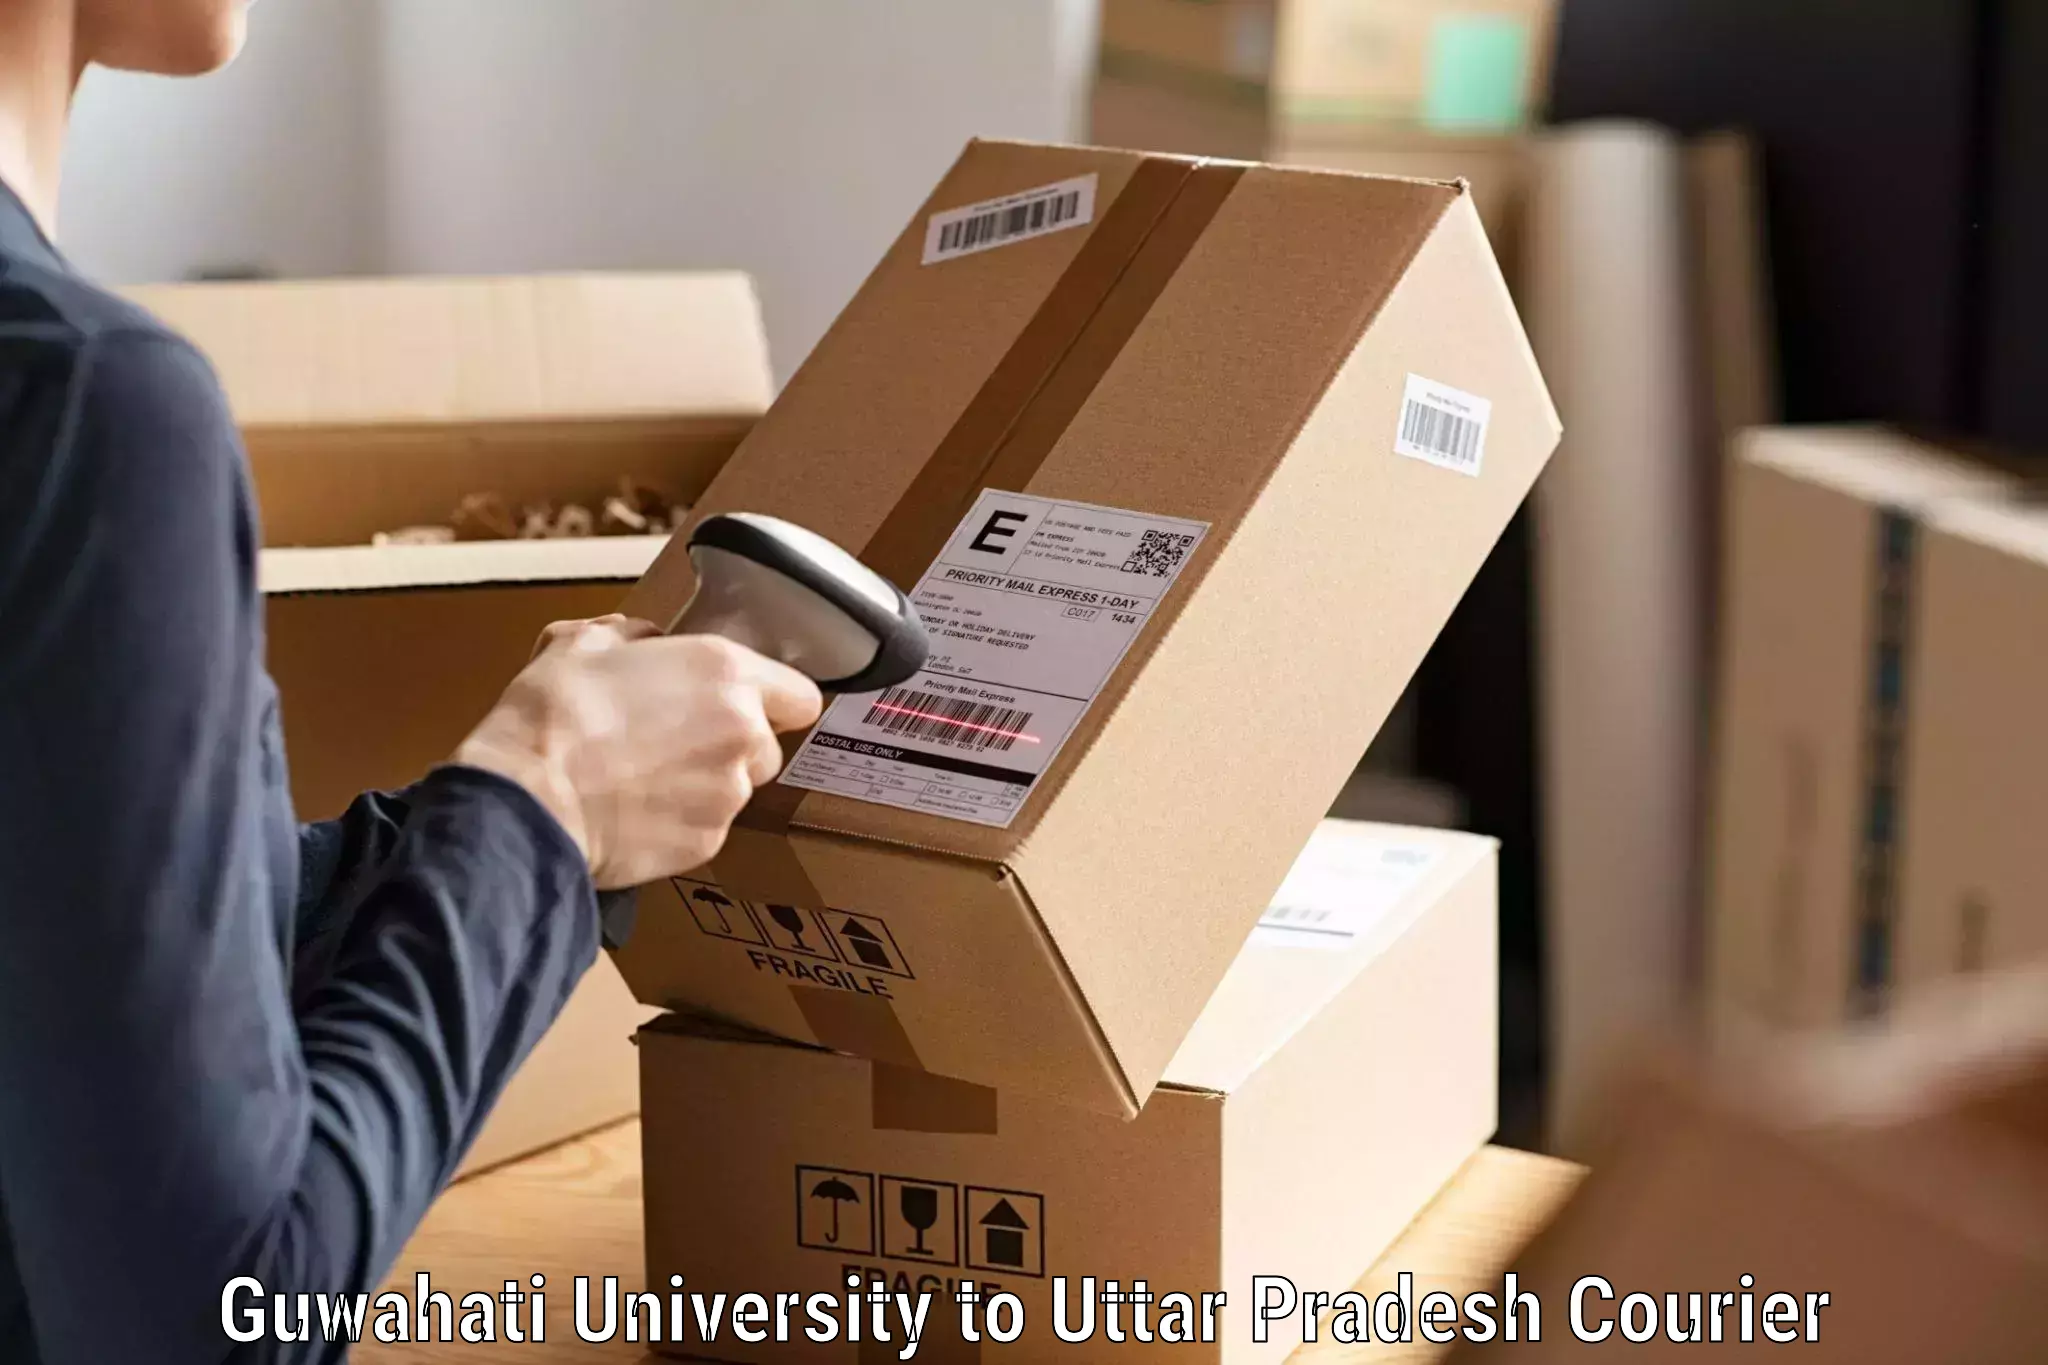 International parcel service Guwahati University to Baksha